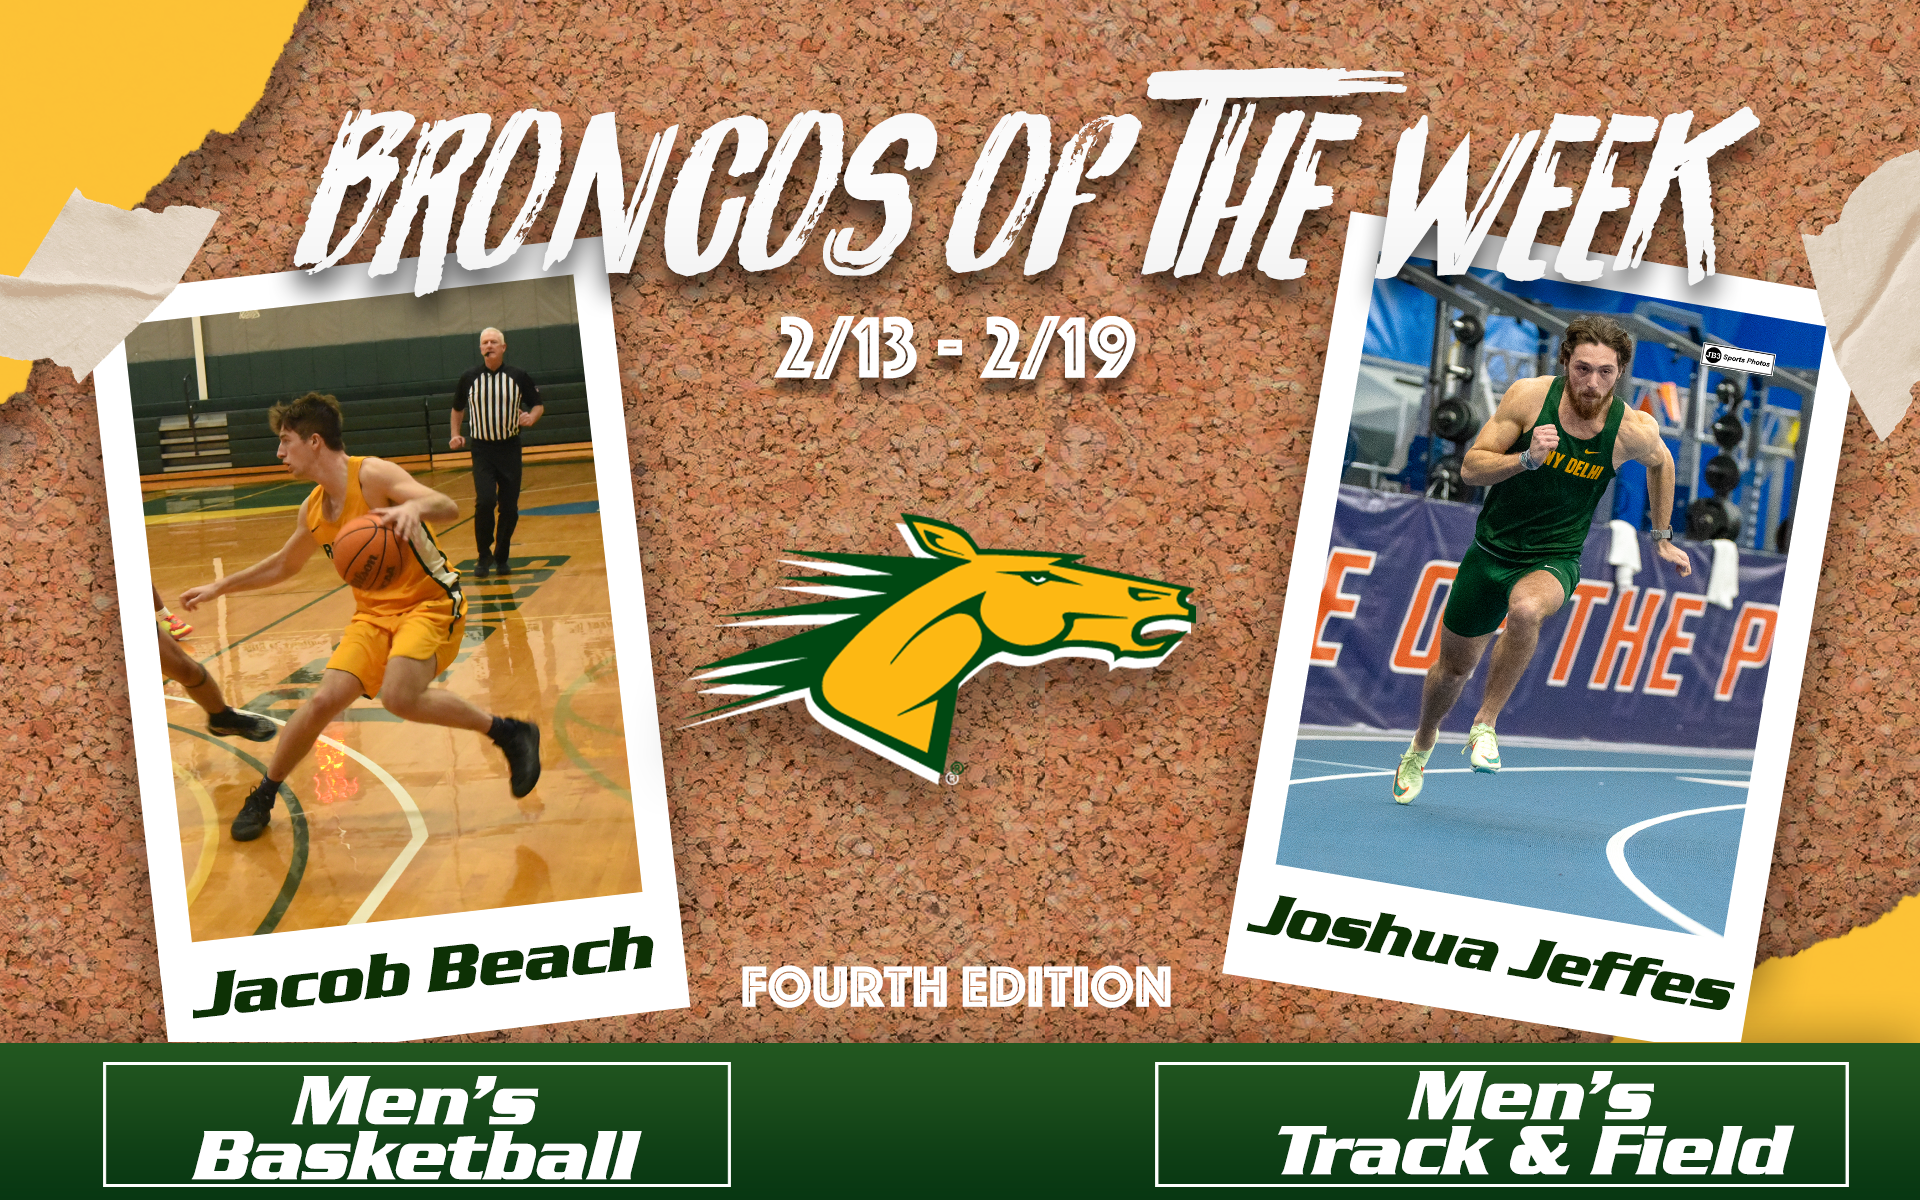 Bronco of the Week #4 Josh Jeffes, Jacob Beach (2/20)